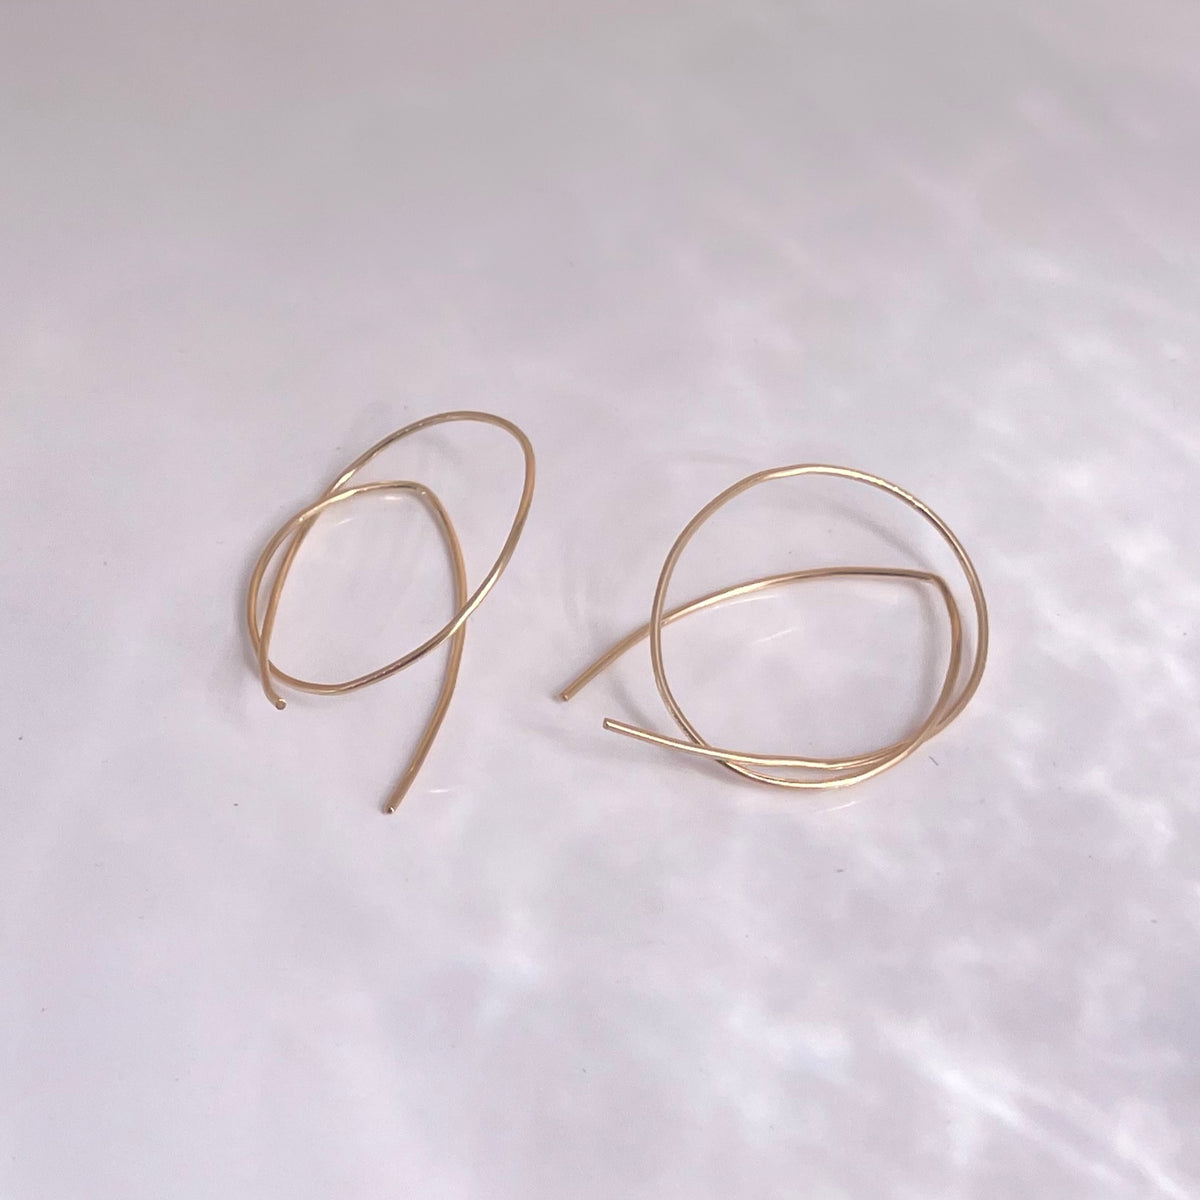 Thin Rope Earrings | Simple Dangle Hoops | Organic Circle Dangle Earrings | Everyday Gift for Her | Lightweight Earrings | 0361